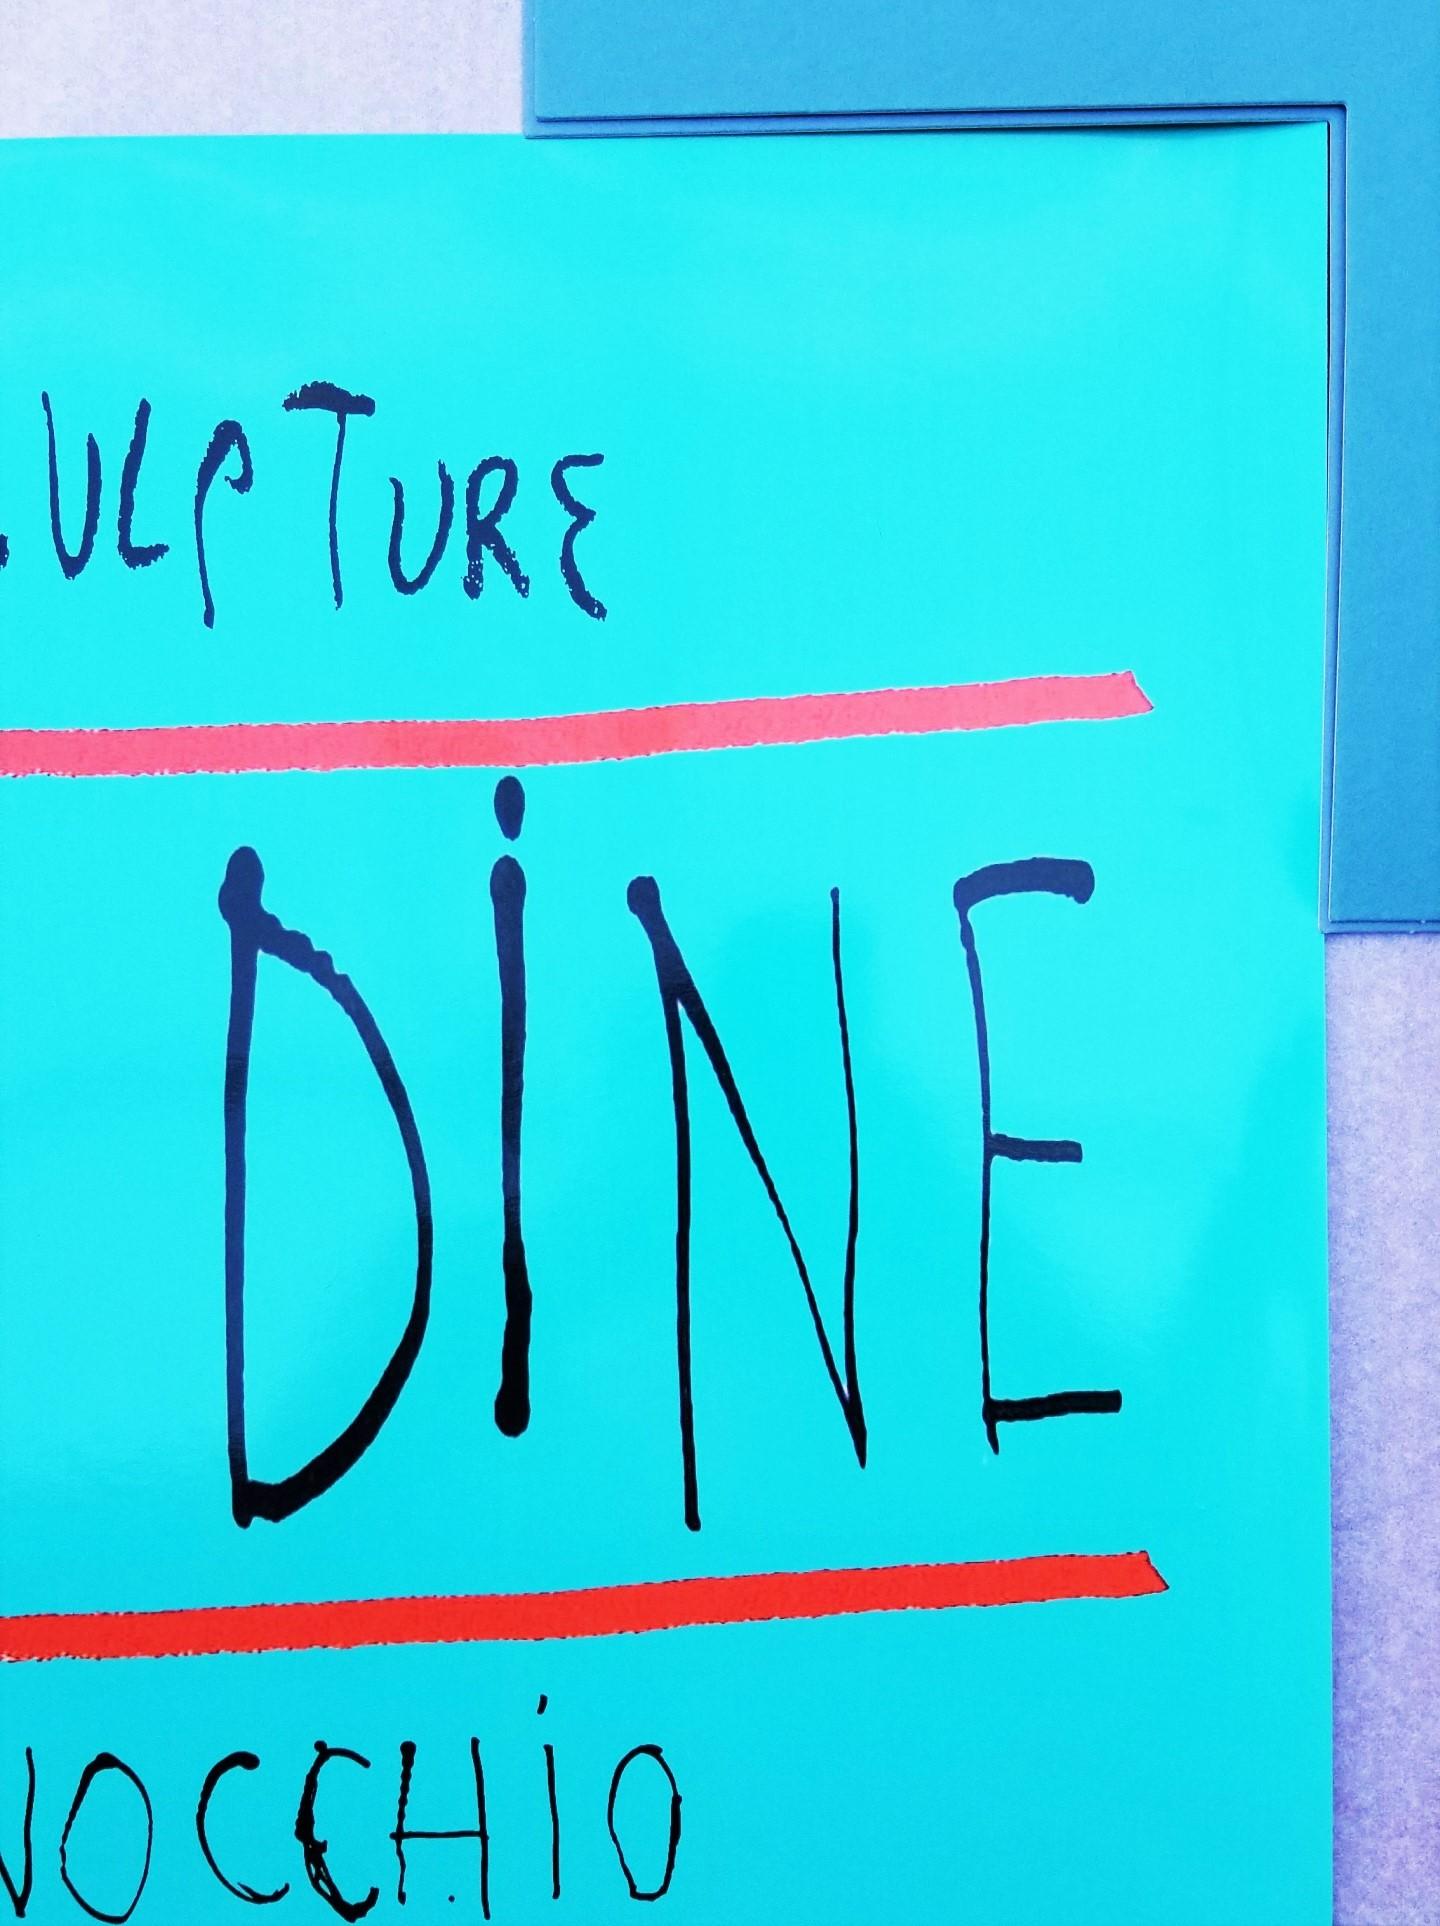 Artist: (after) Jim Dine (American, 1935-)
Title: 